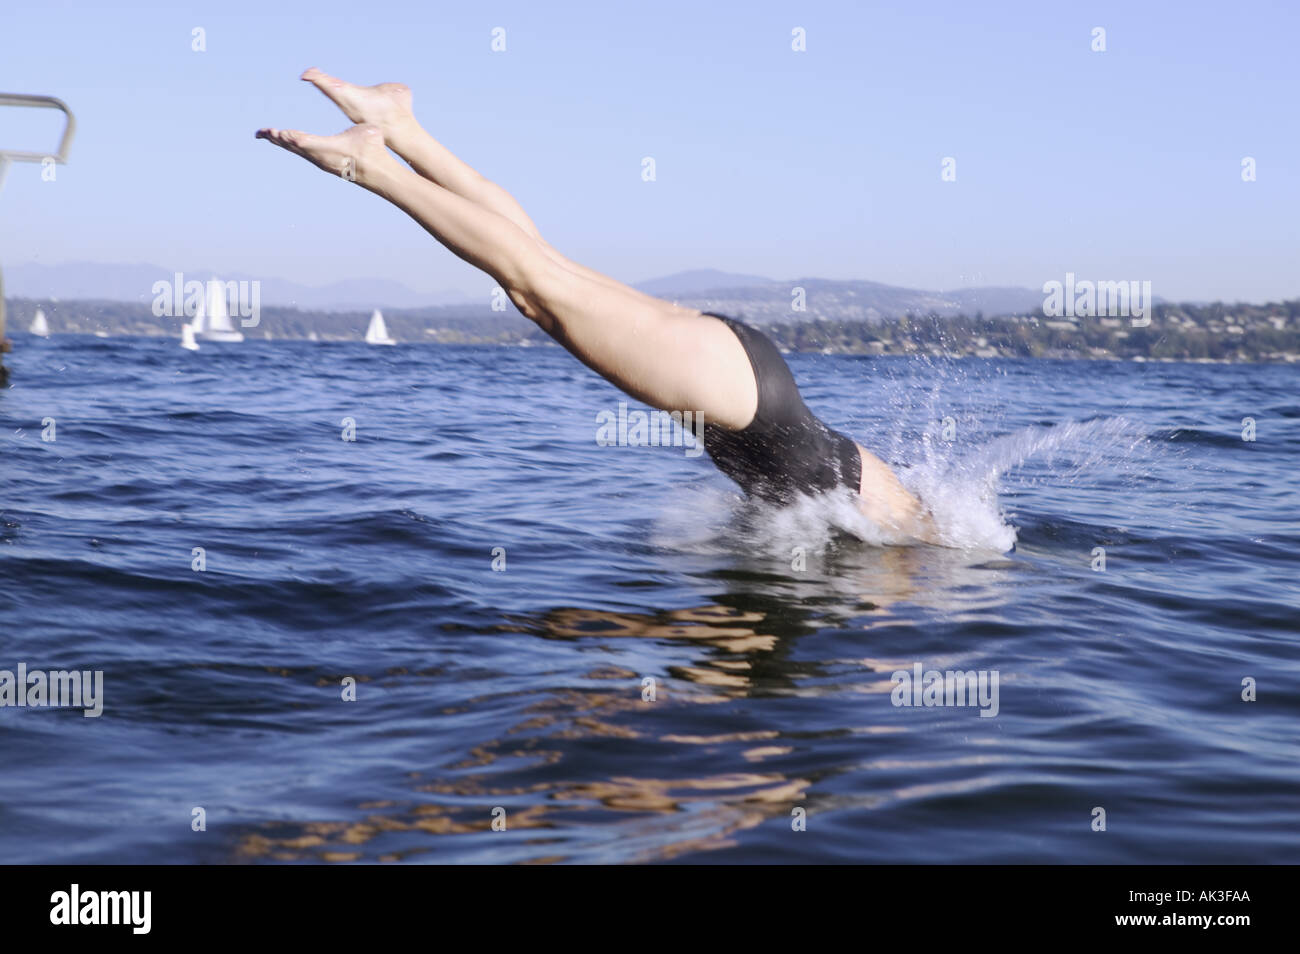 A woman diving into a lake Stock Photo